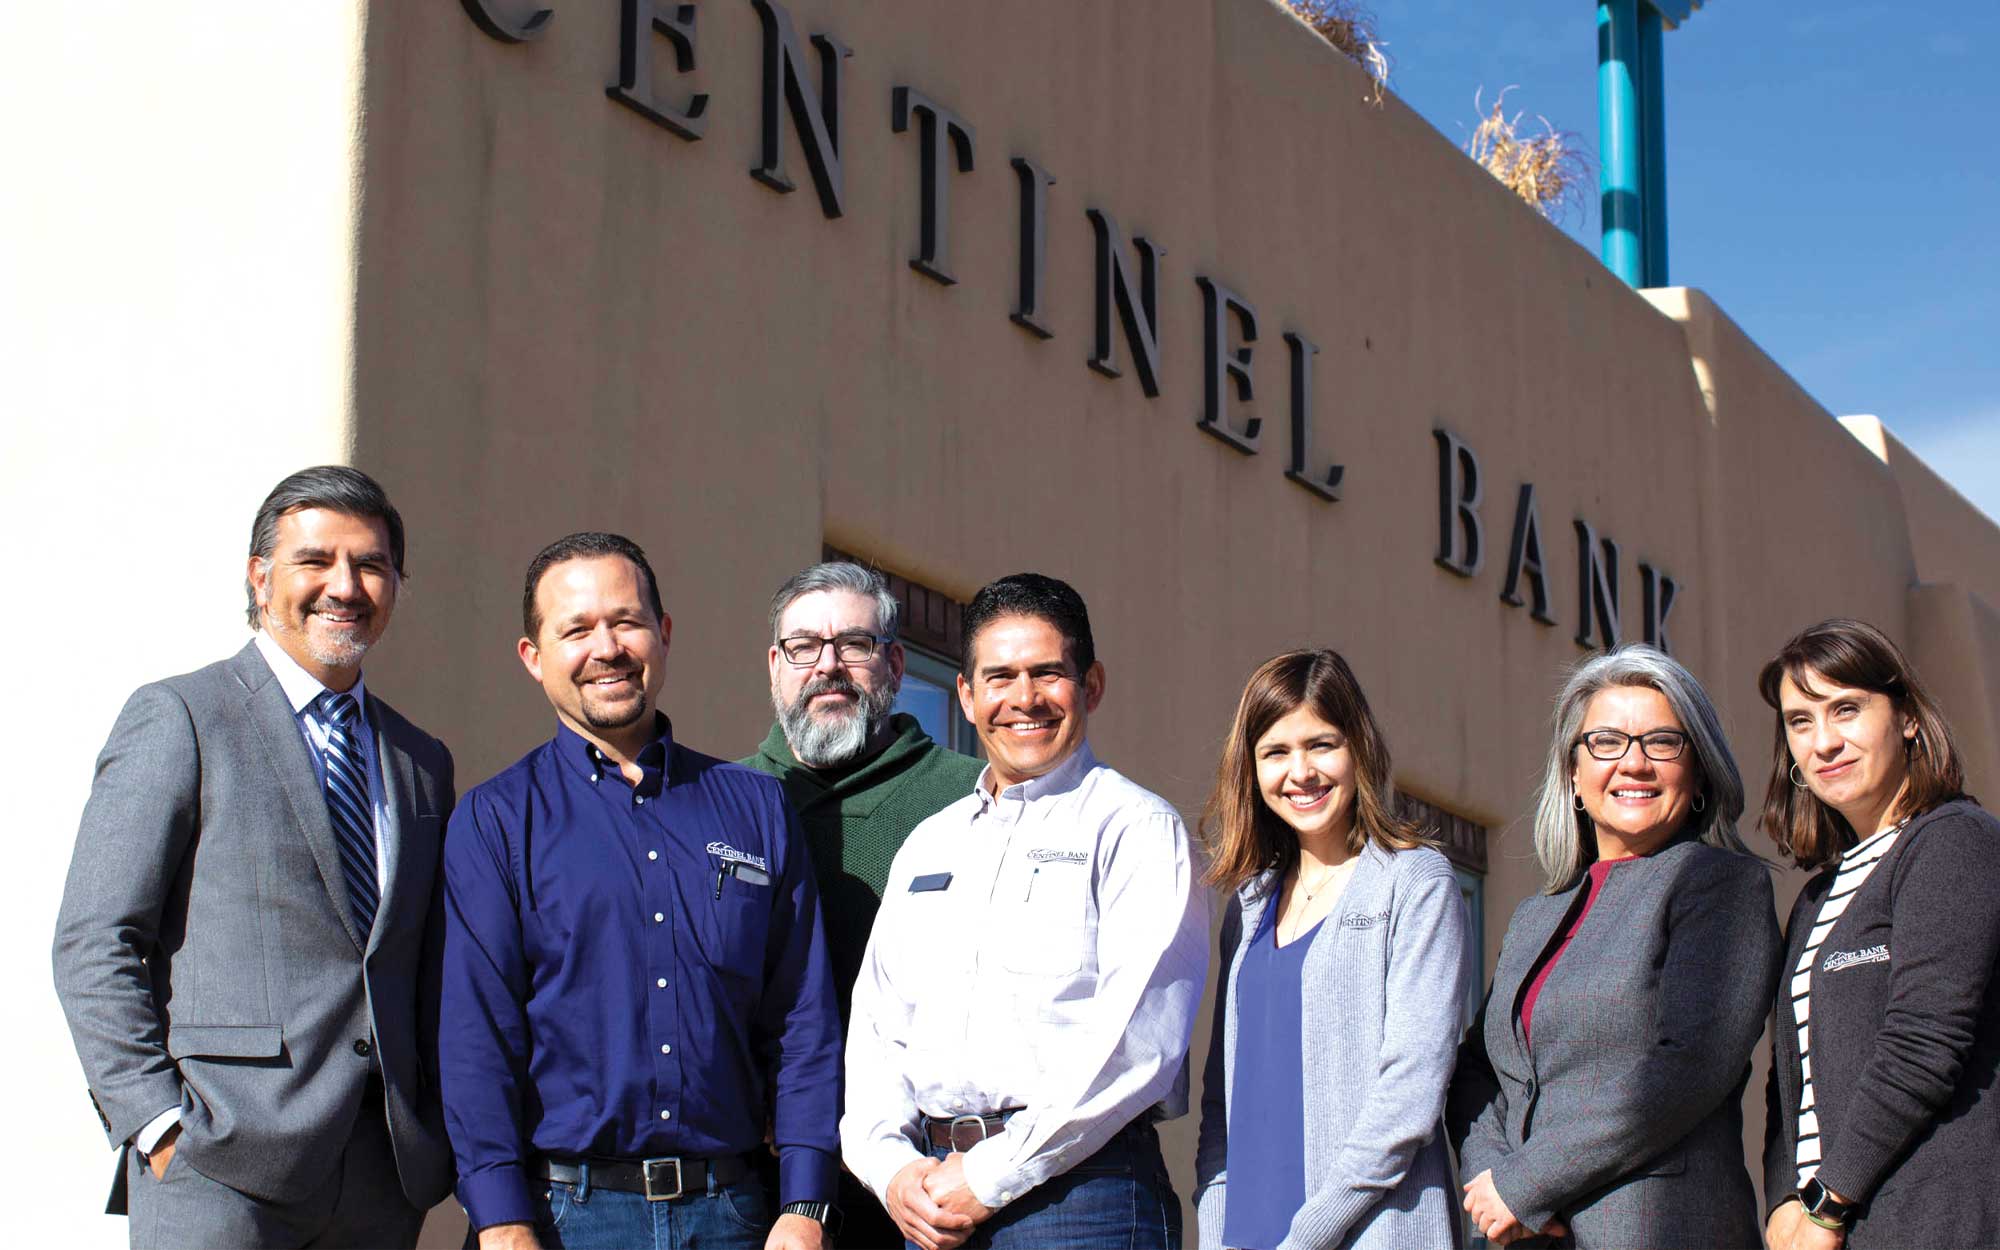 Centinel Bank team